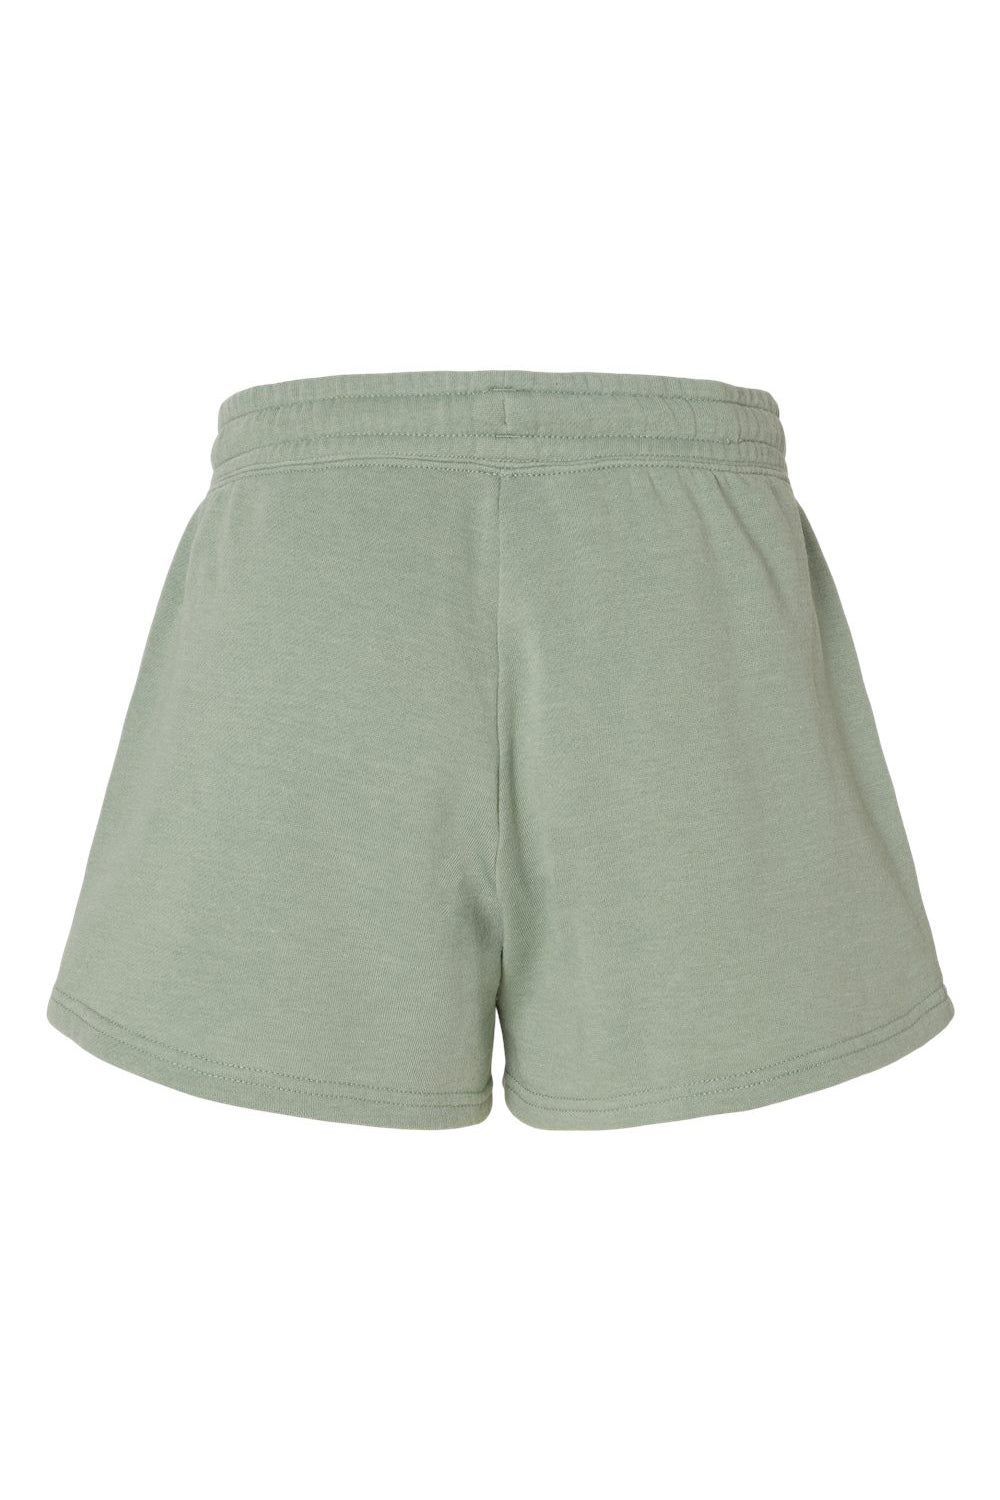 Independent Trading Co. PRM20SRT Womens California Wave Wash Fleece Shorts w/ Pockets Sage Green Flat Back